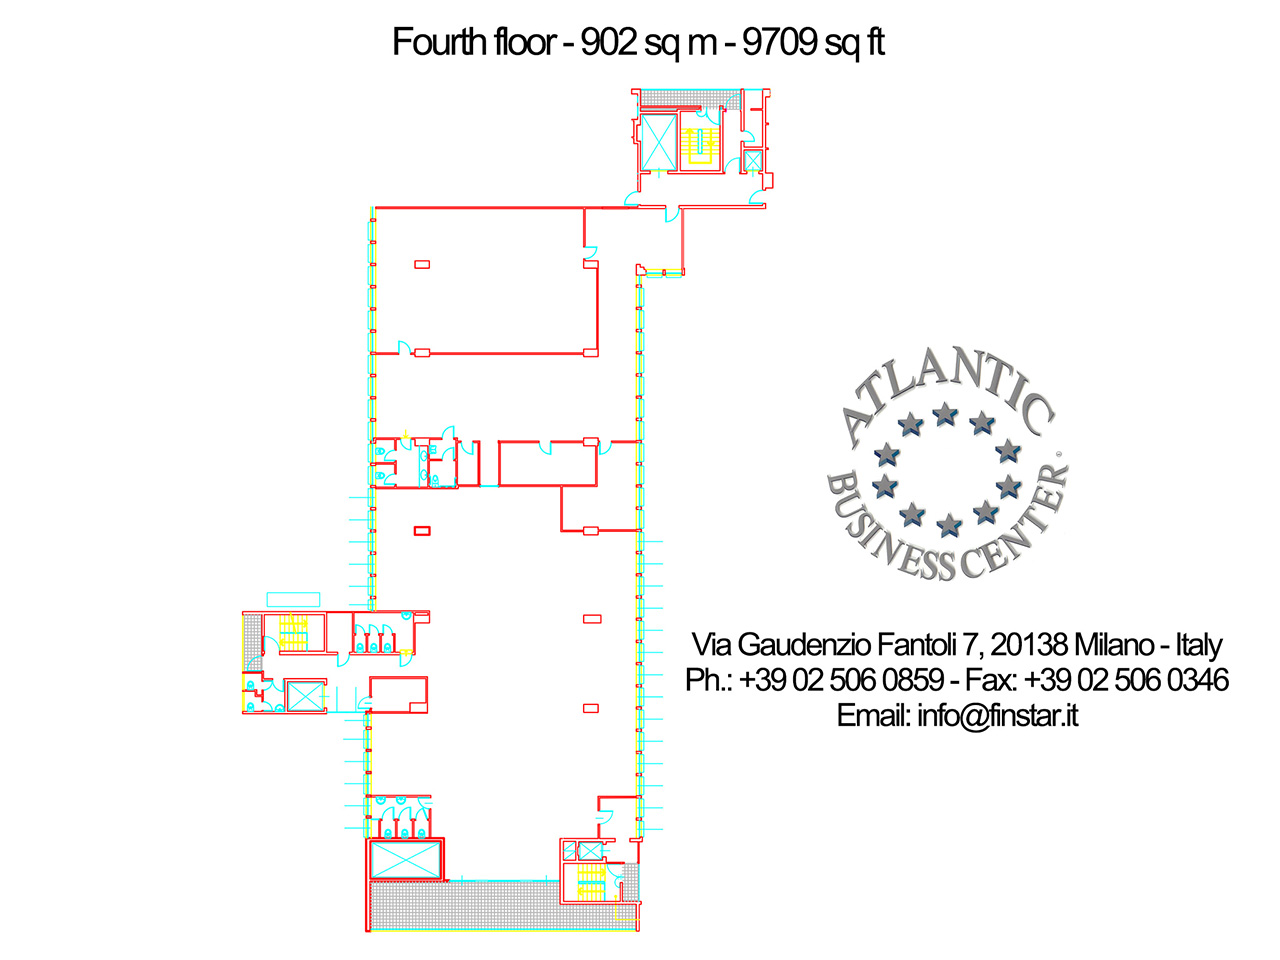 office 902 sq m (9709 sq ft) - Atlantic Business Center - fourth floor - floor plan